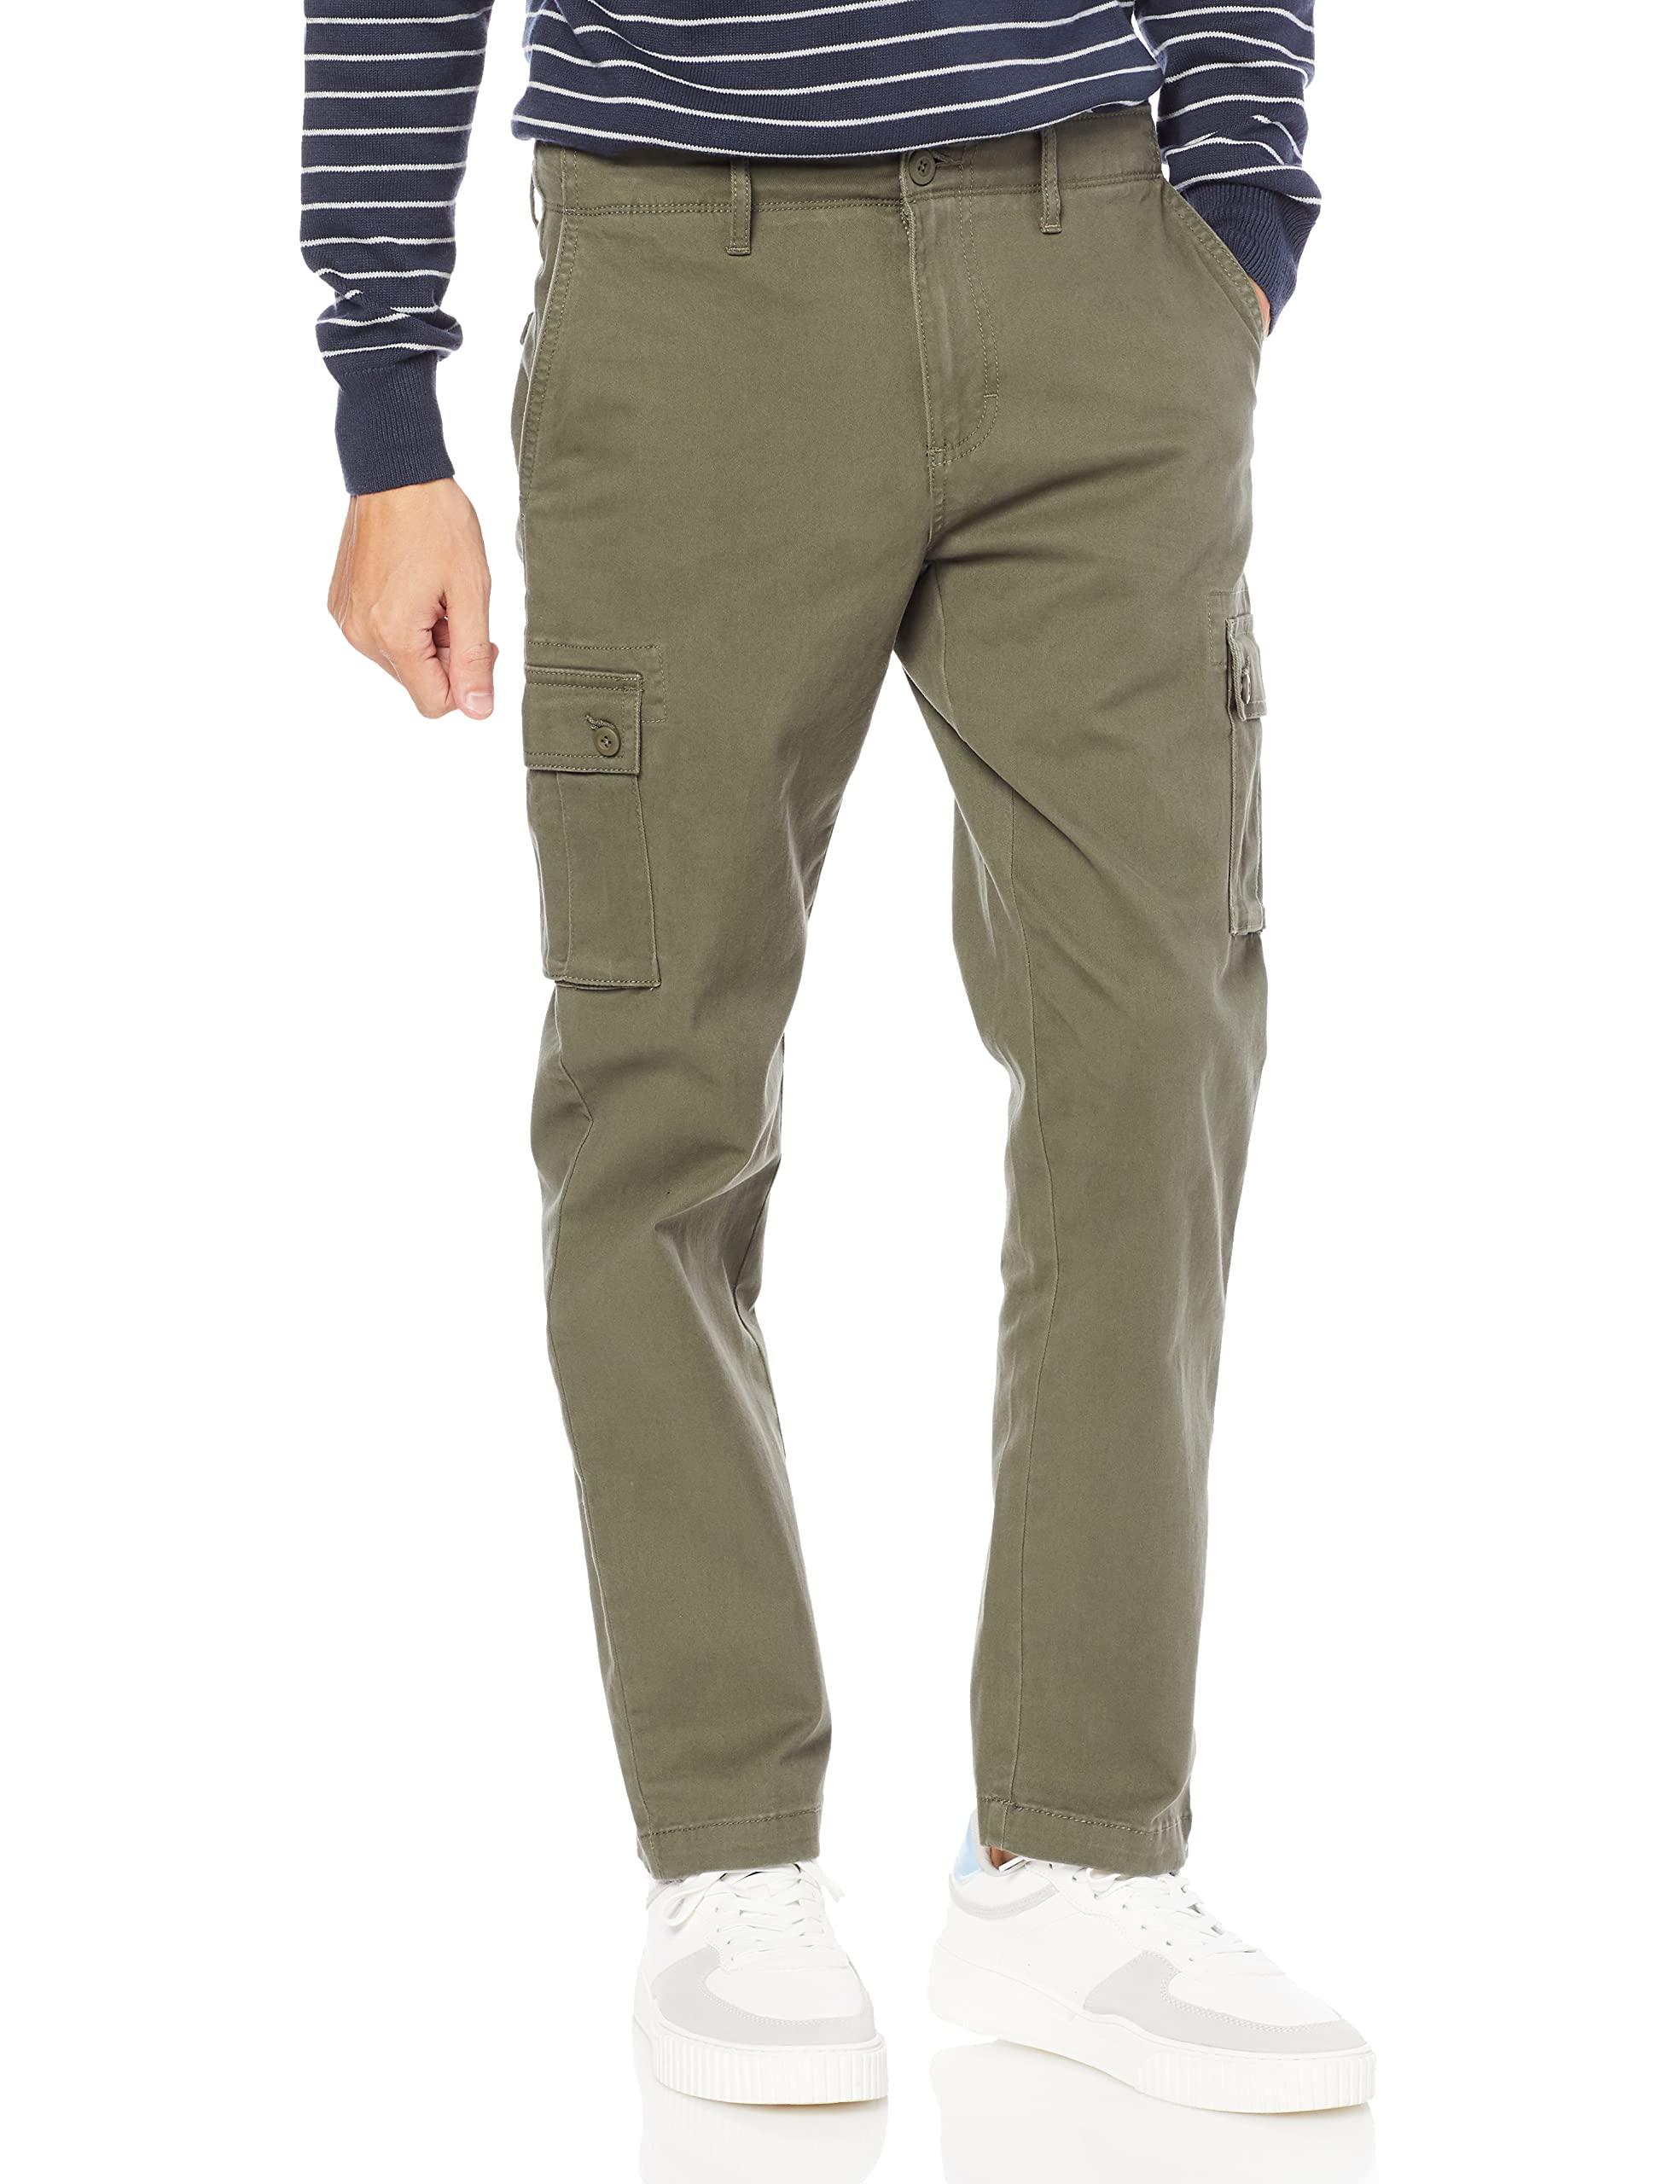 Buy t-base Men's Khaki Solid Cargo Pants - Cargo Pant for Men at Amazon.in